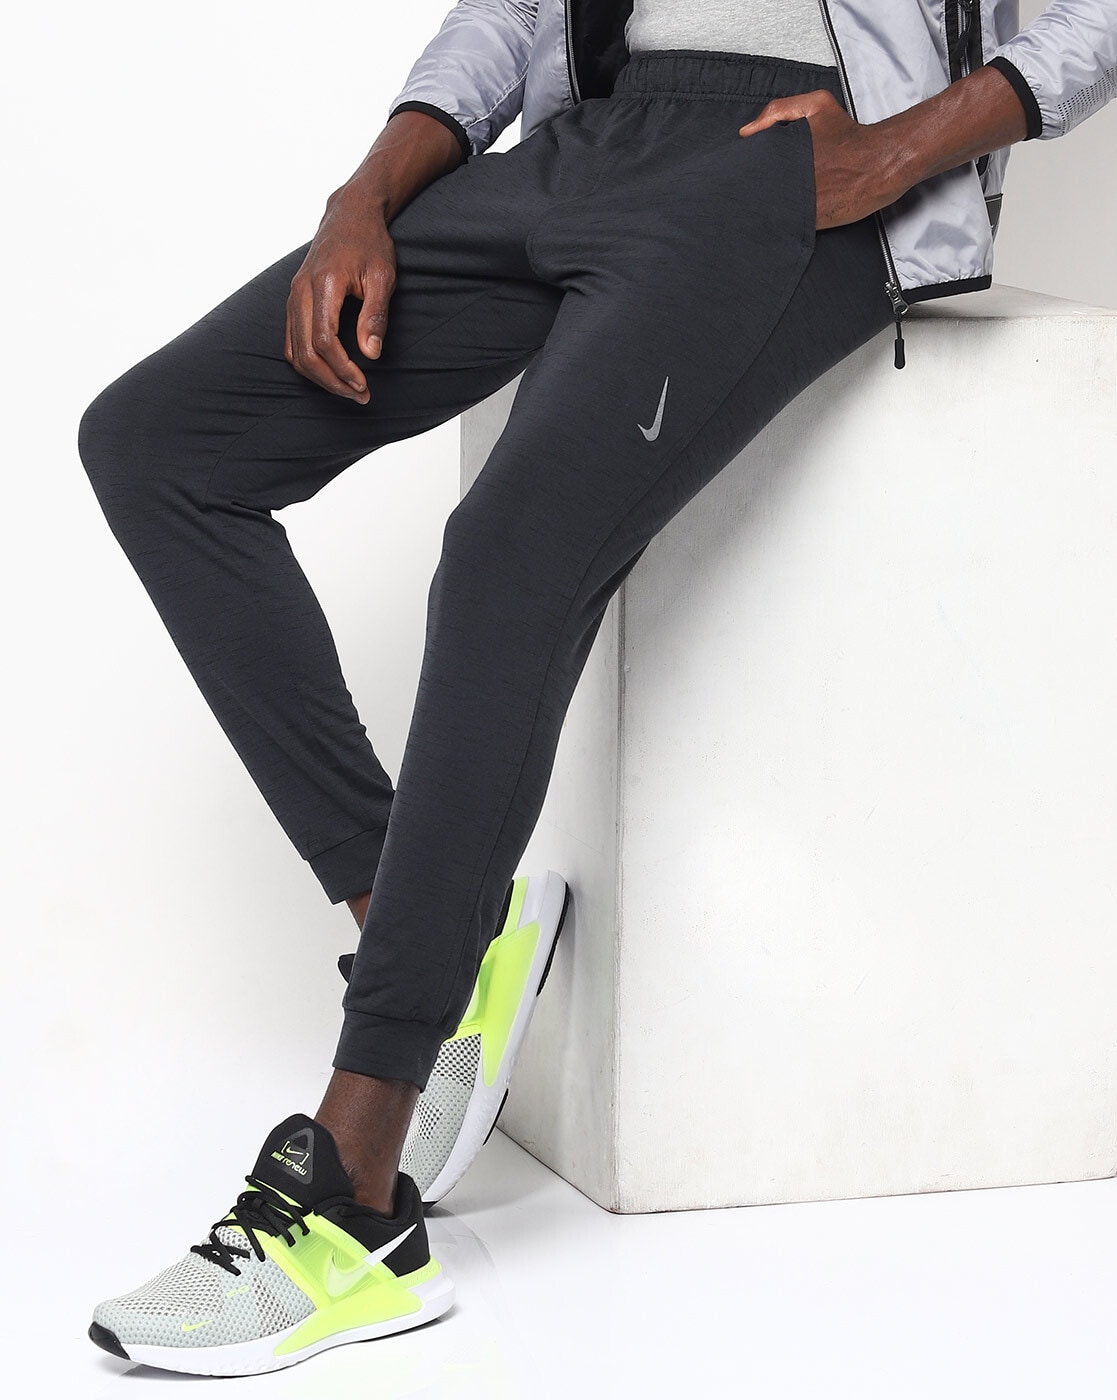 Nike Running Epic Luxe mid rise 7/8 leggings in blue wash | ASOS